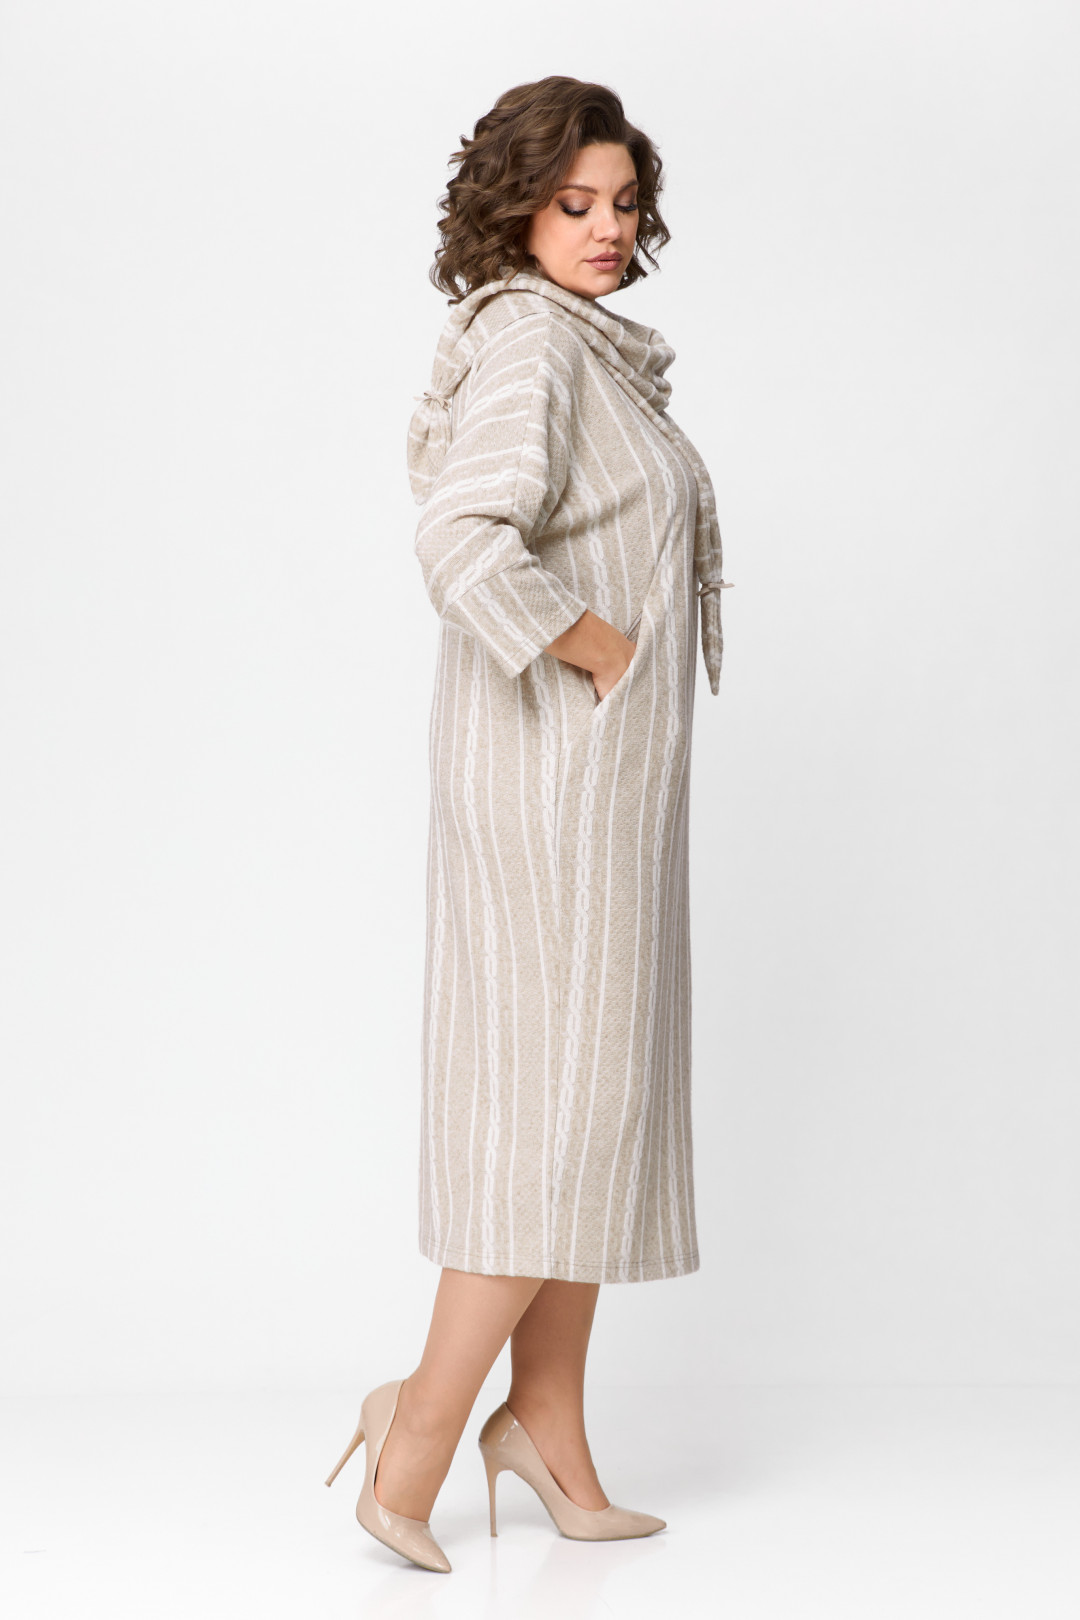 Платье Мишель Шик 2157 белый, бежевый